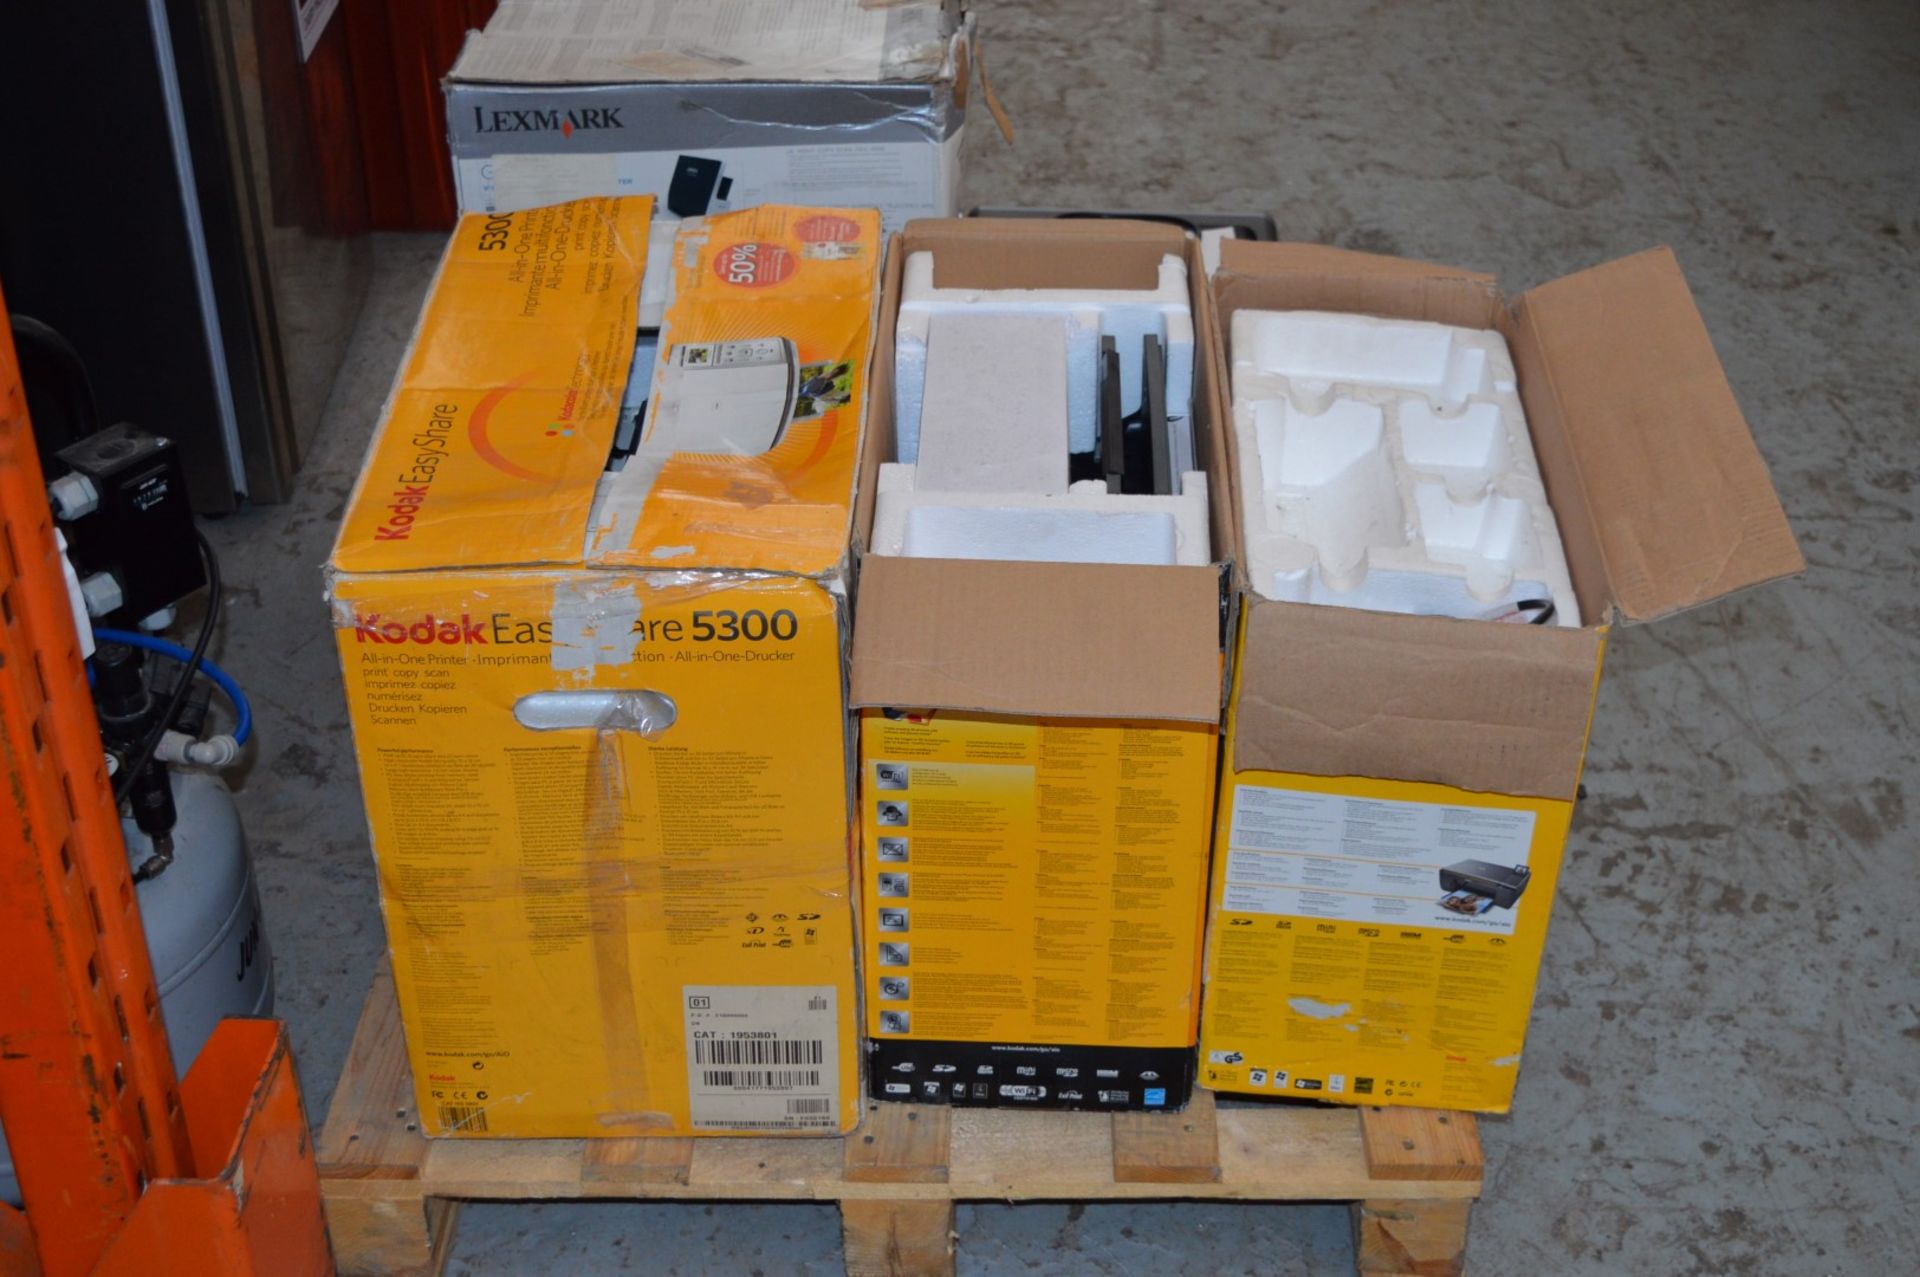 5 x Various Lexmark and Kodak Printers - Includes Lexmark Genesis Printer, Lexmark Pinnacle WiFi Pri - Image 11 of 22